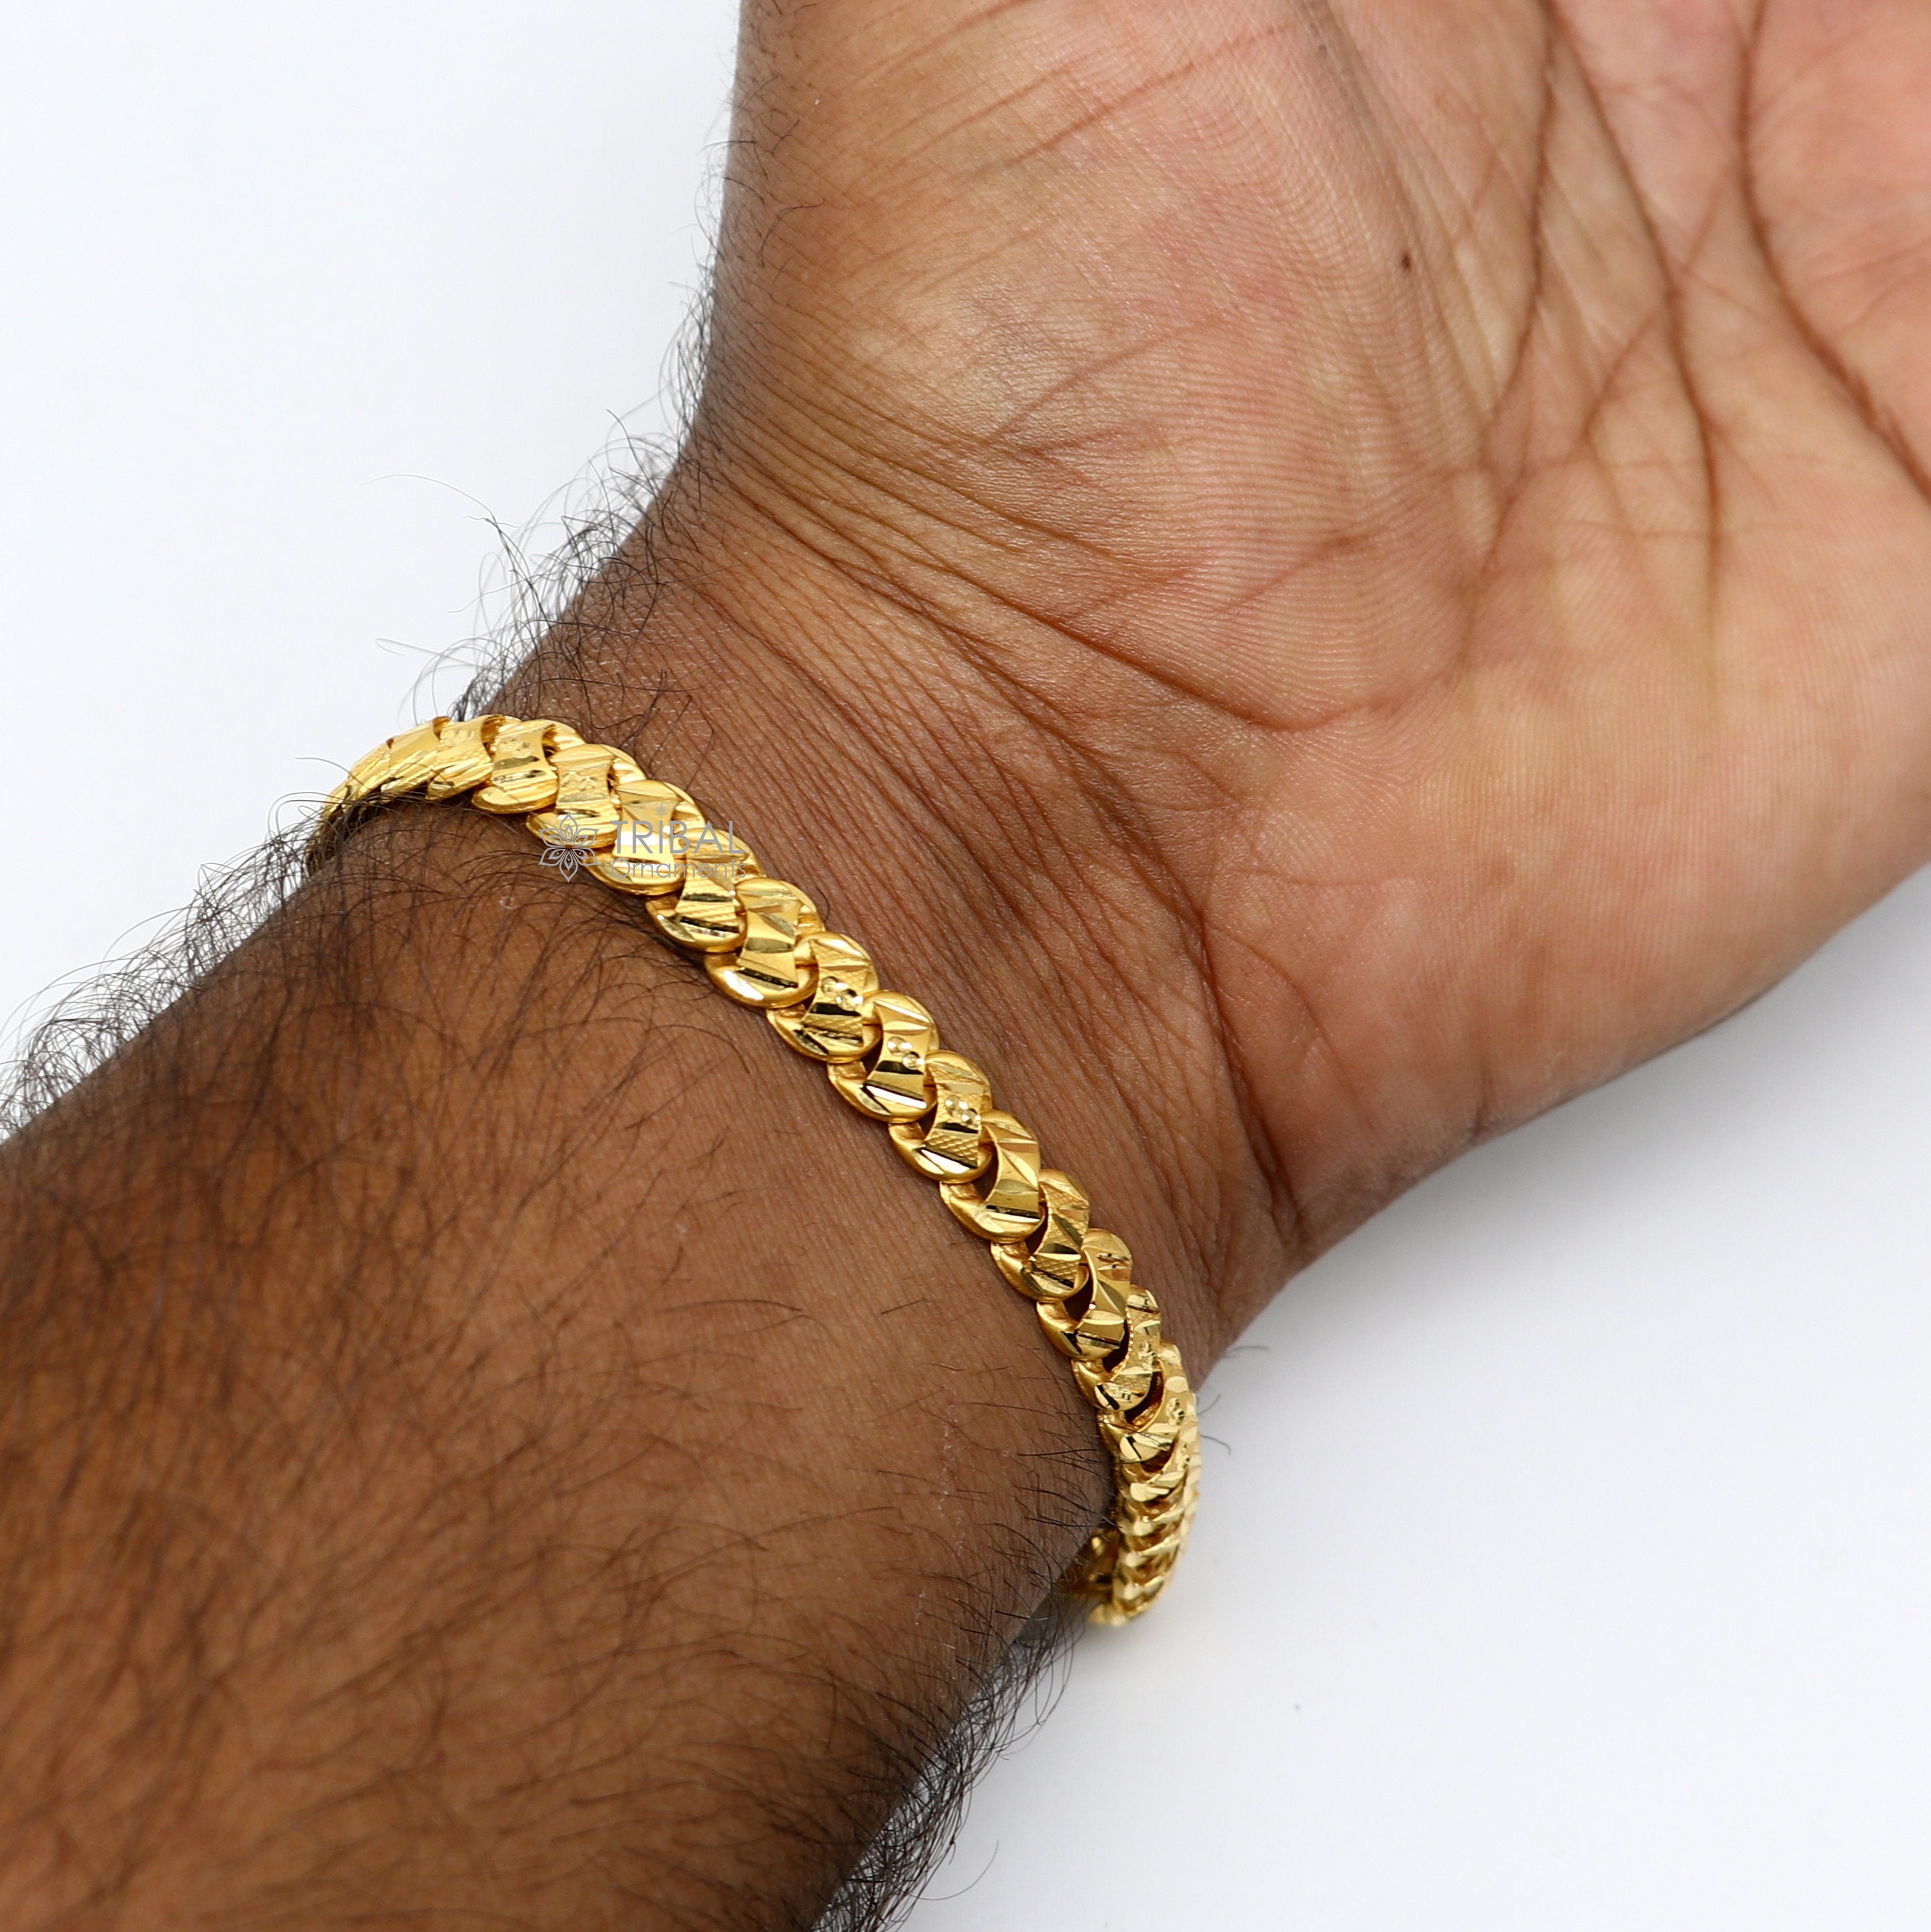 Men initial bracelet - JayC's Menbeads